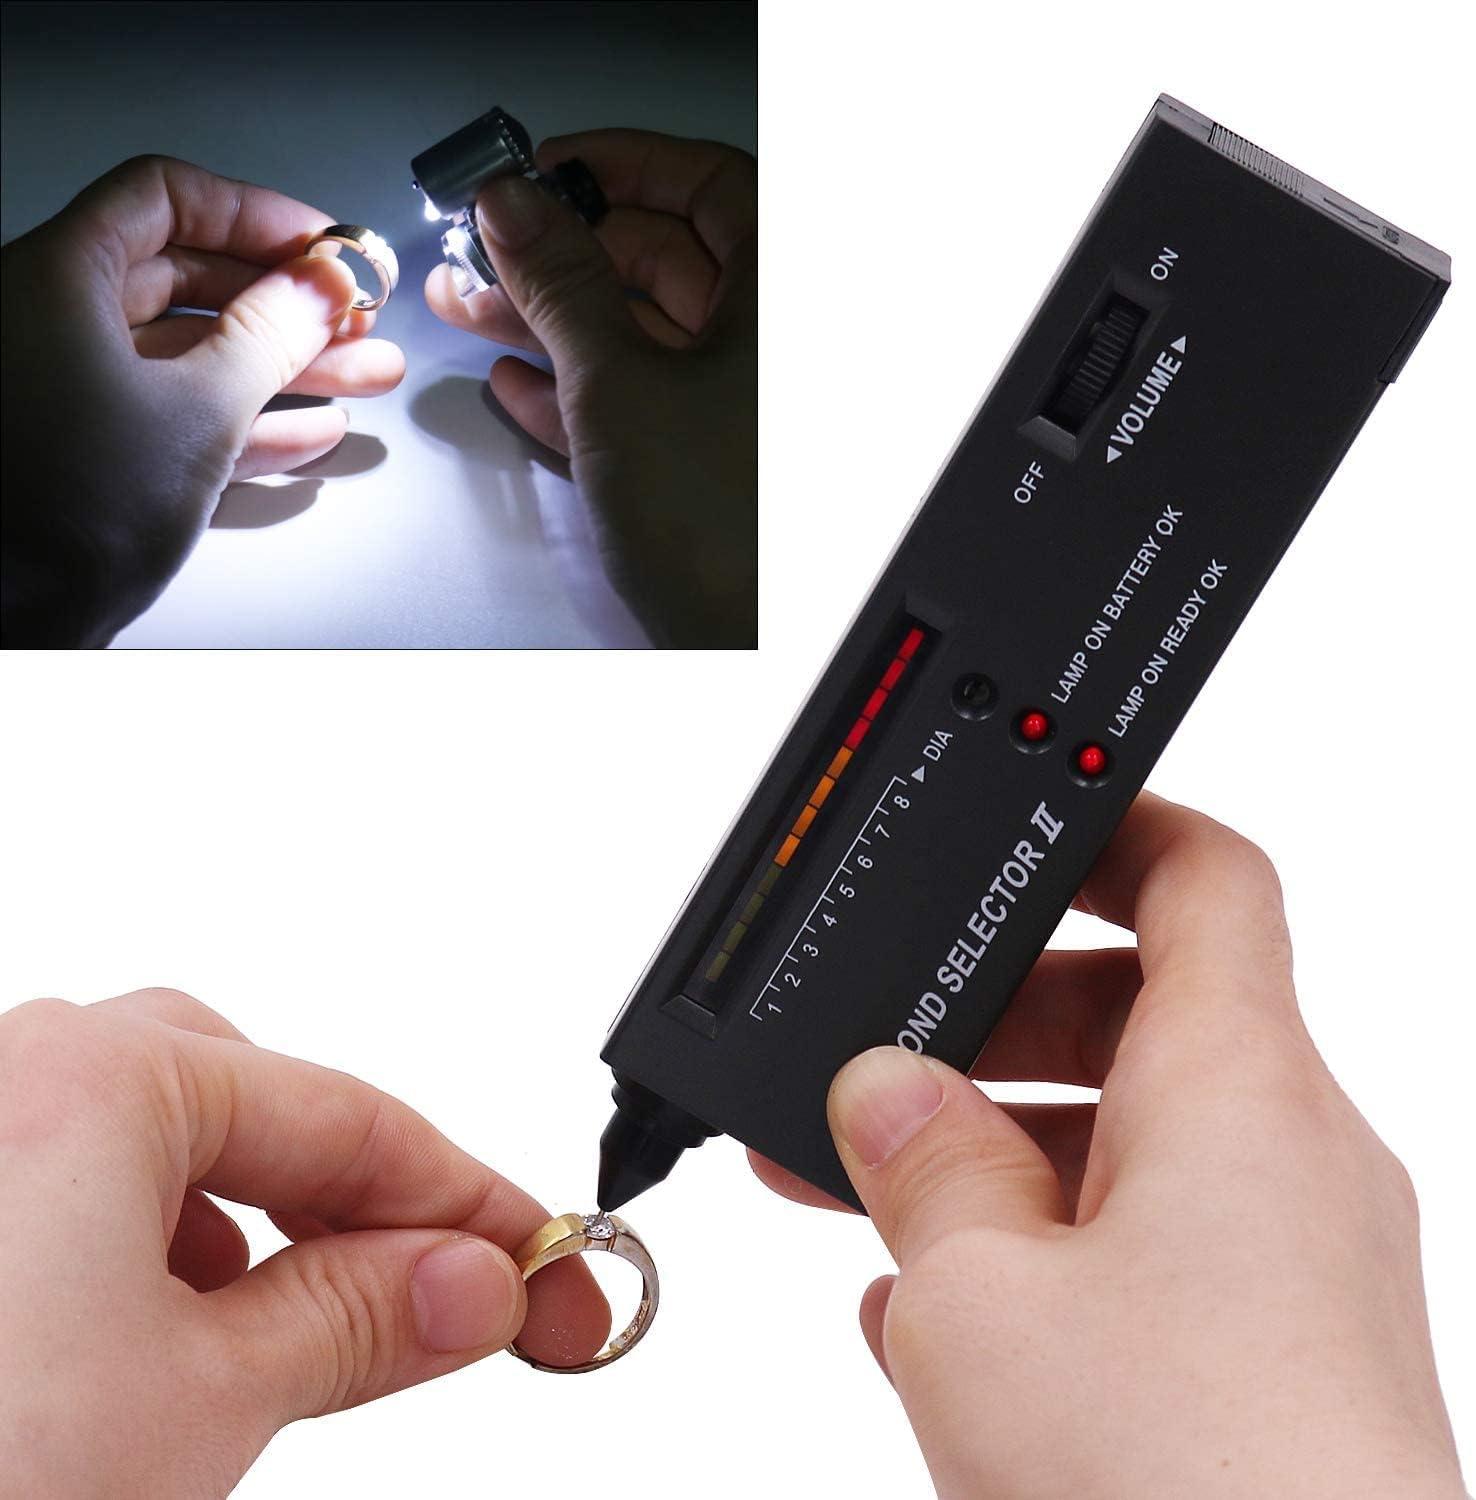 Diamond Tester Pen,Professional Diamond Detector with 60X Mini LED